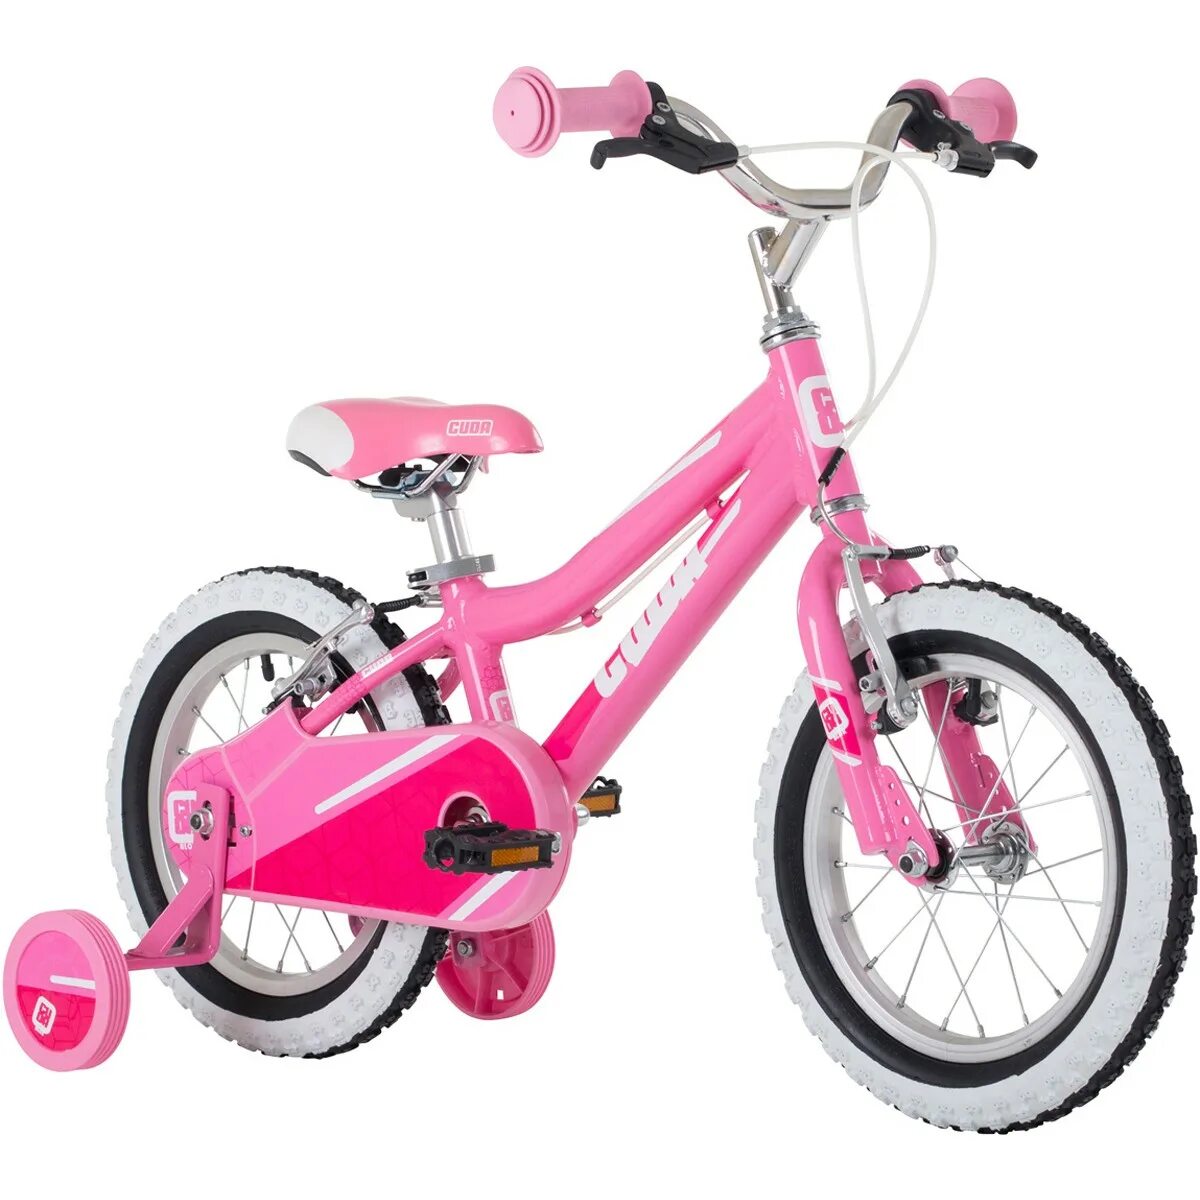 Детский велосипед Raleigh Atom 14 inch. Велосипед детский Actiwell Kids 12. Rush RS велосипед детский. Детский велосипед Raleigh Molli 12 girls.